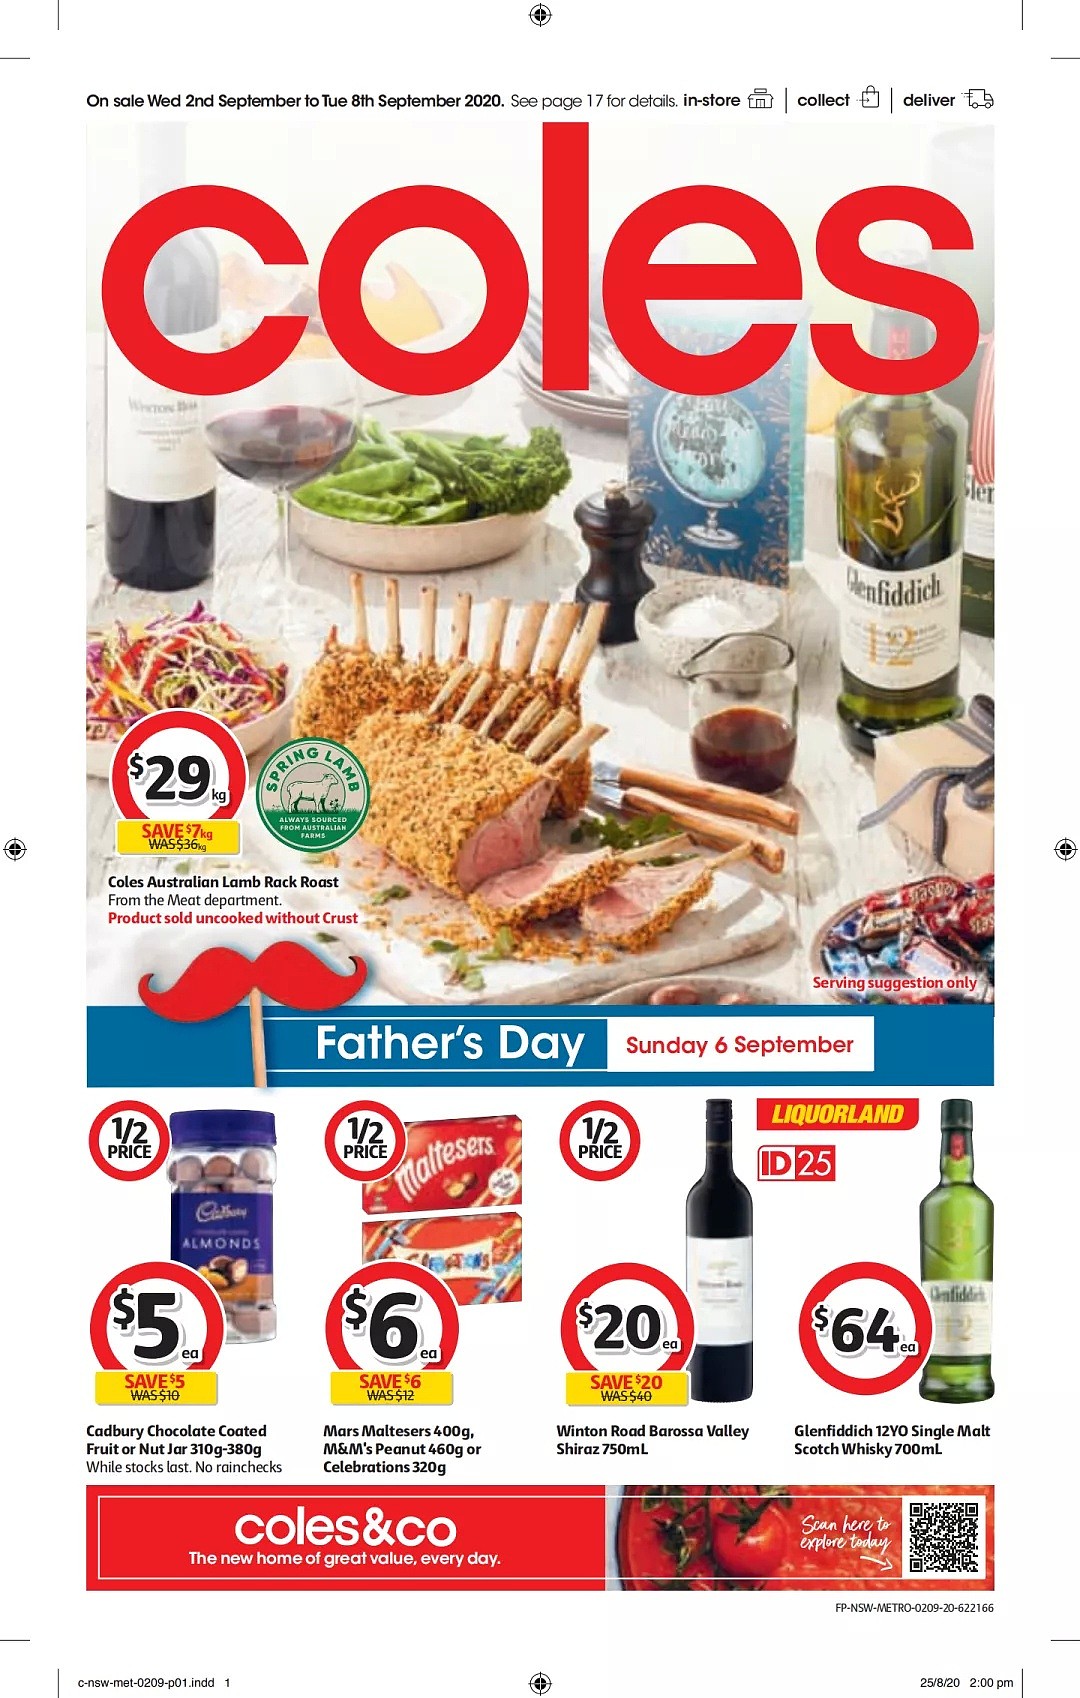 Coles 9月2日-9月8日折扣，猪肉煎饺、春卷、油、松饼粉半价 - 1